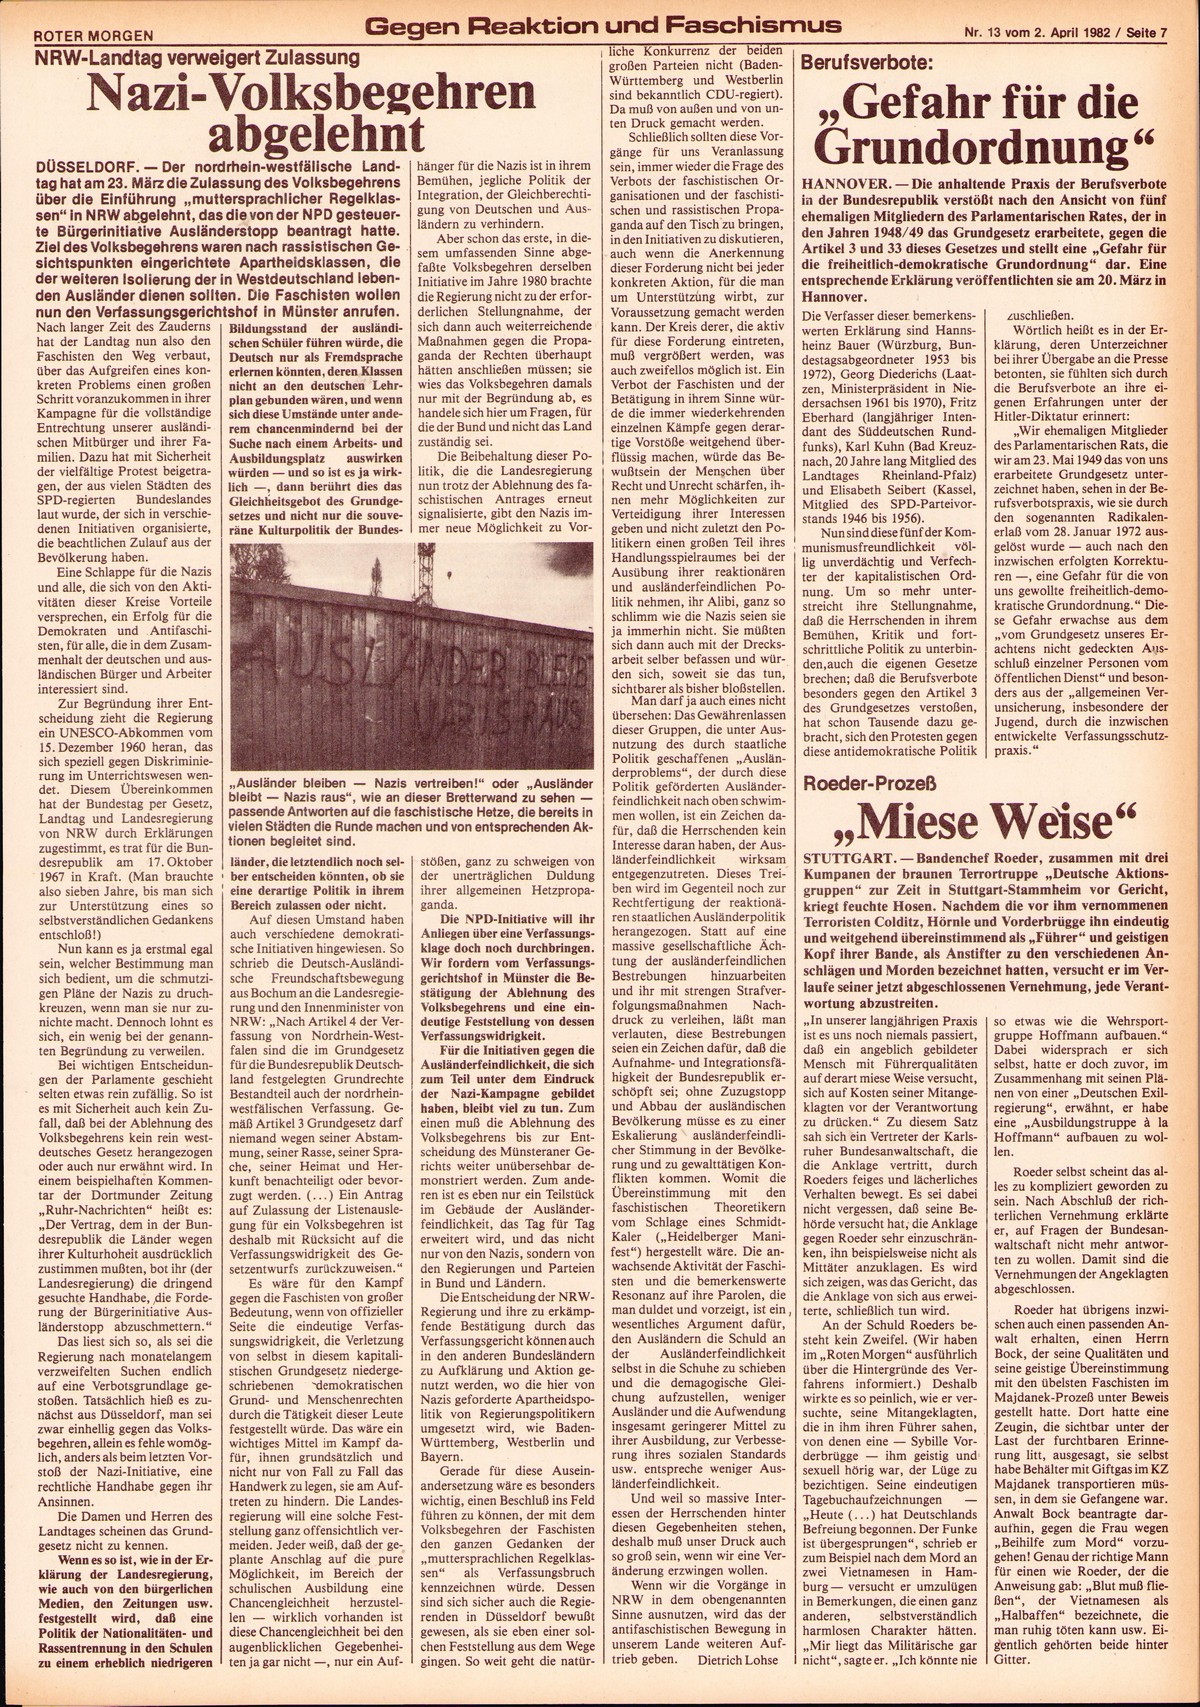 Roter Morgen, 16. Jg., 2. April  1982, Nr. 13, Seite 7